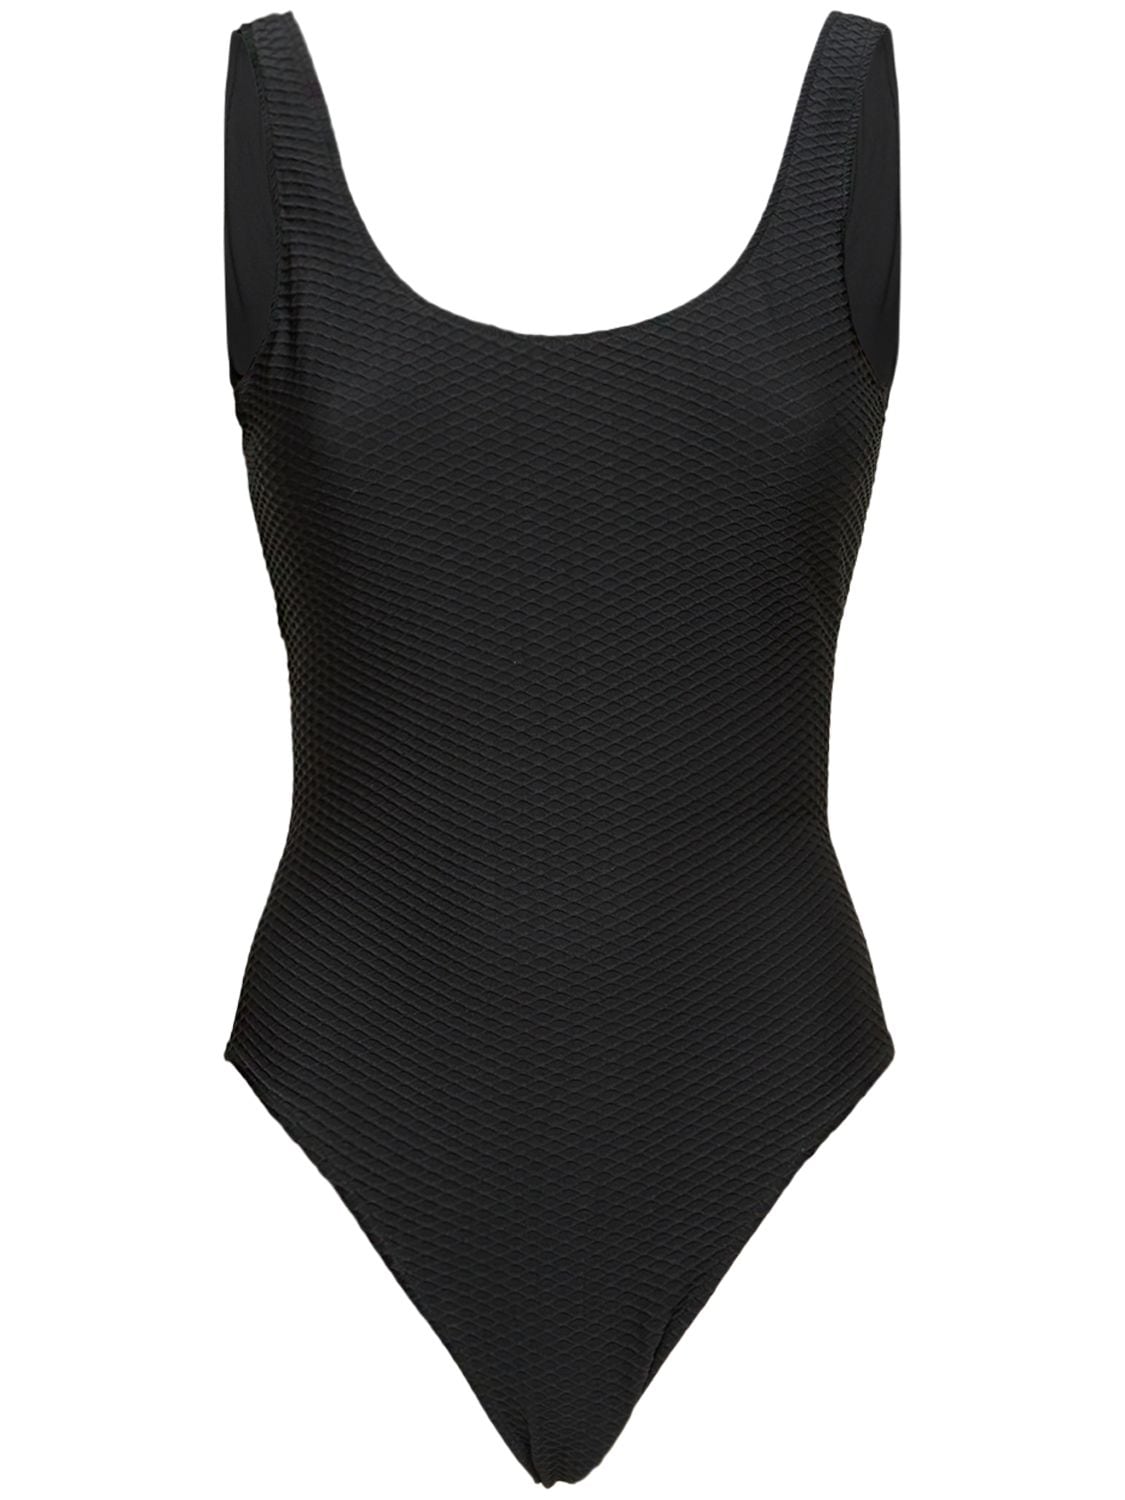 Jace Onepiece Swimsuit image